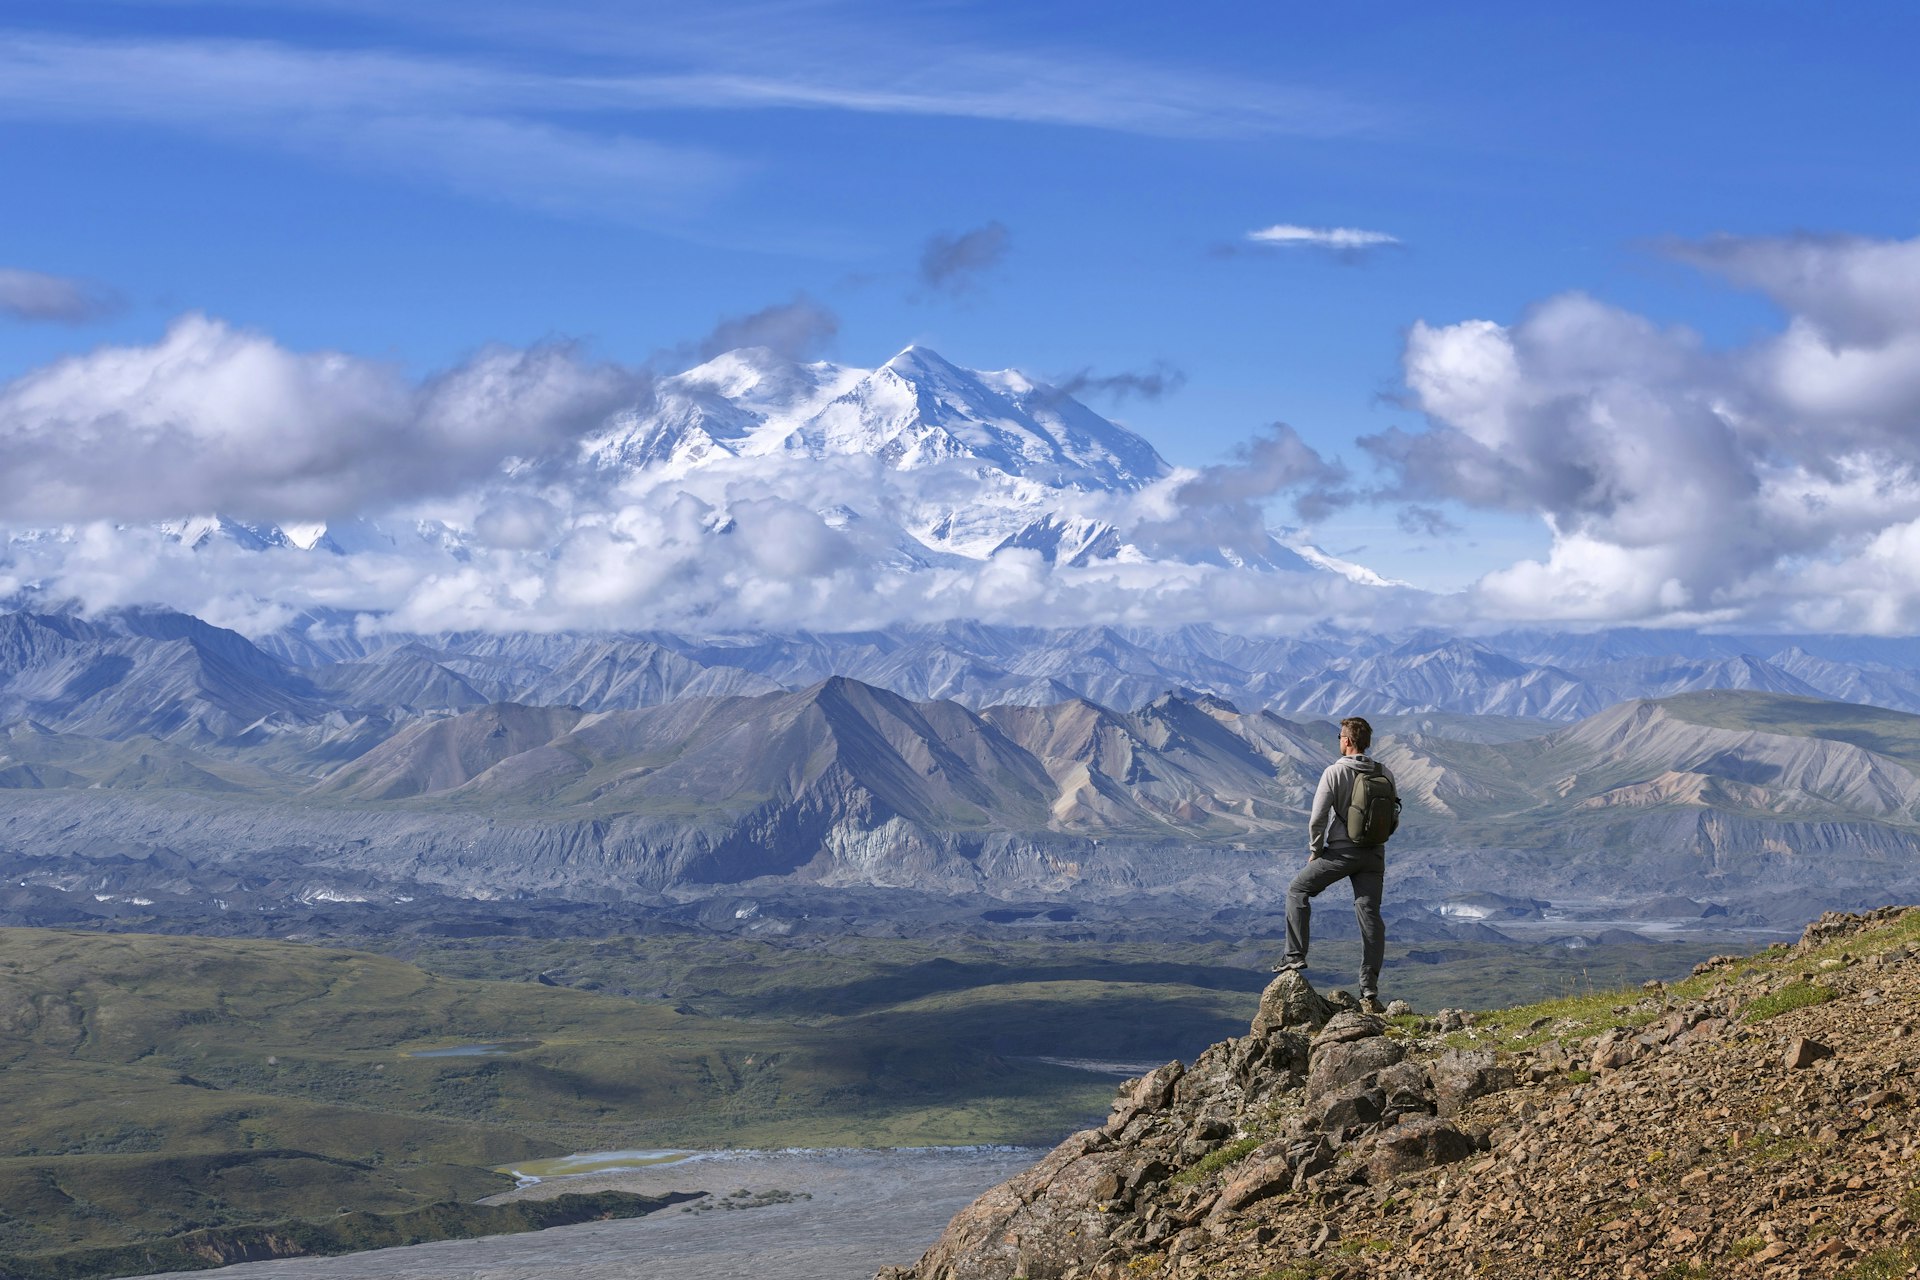 A lone hiker stands looking across the Denali National Park, Alaska